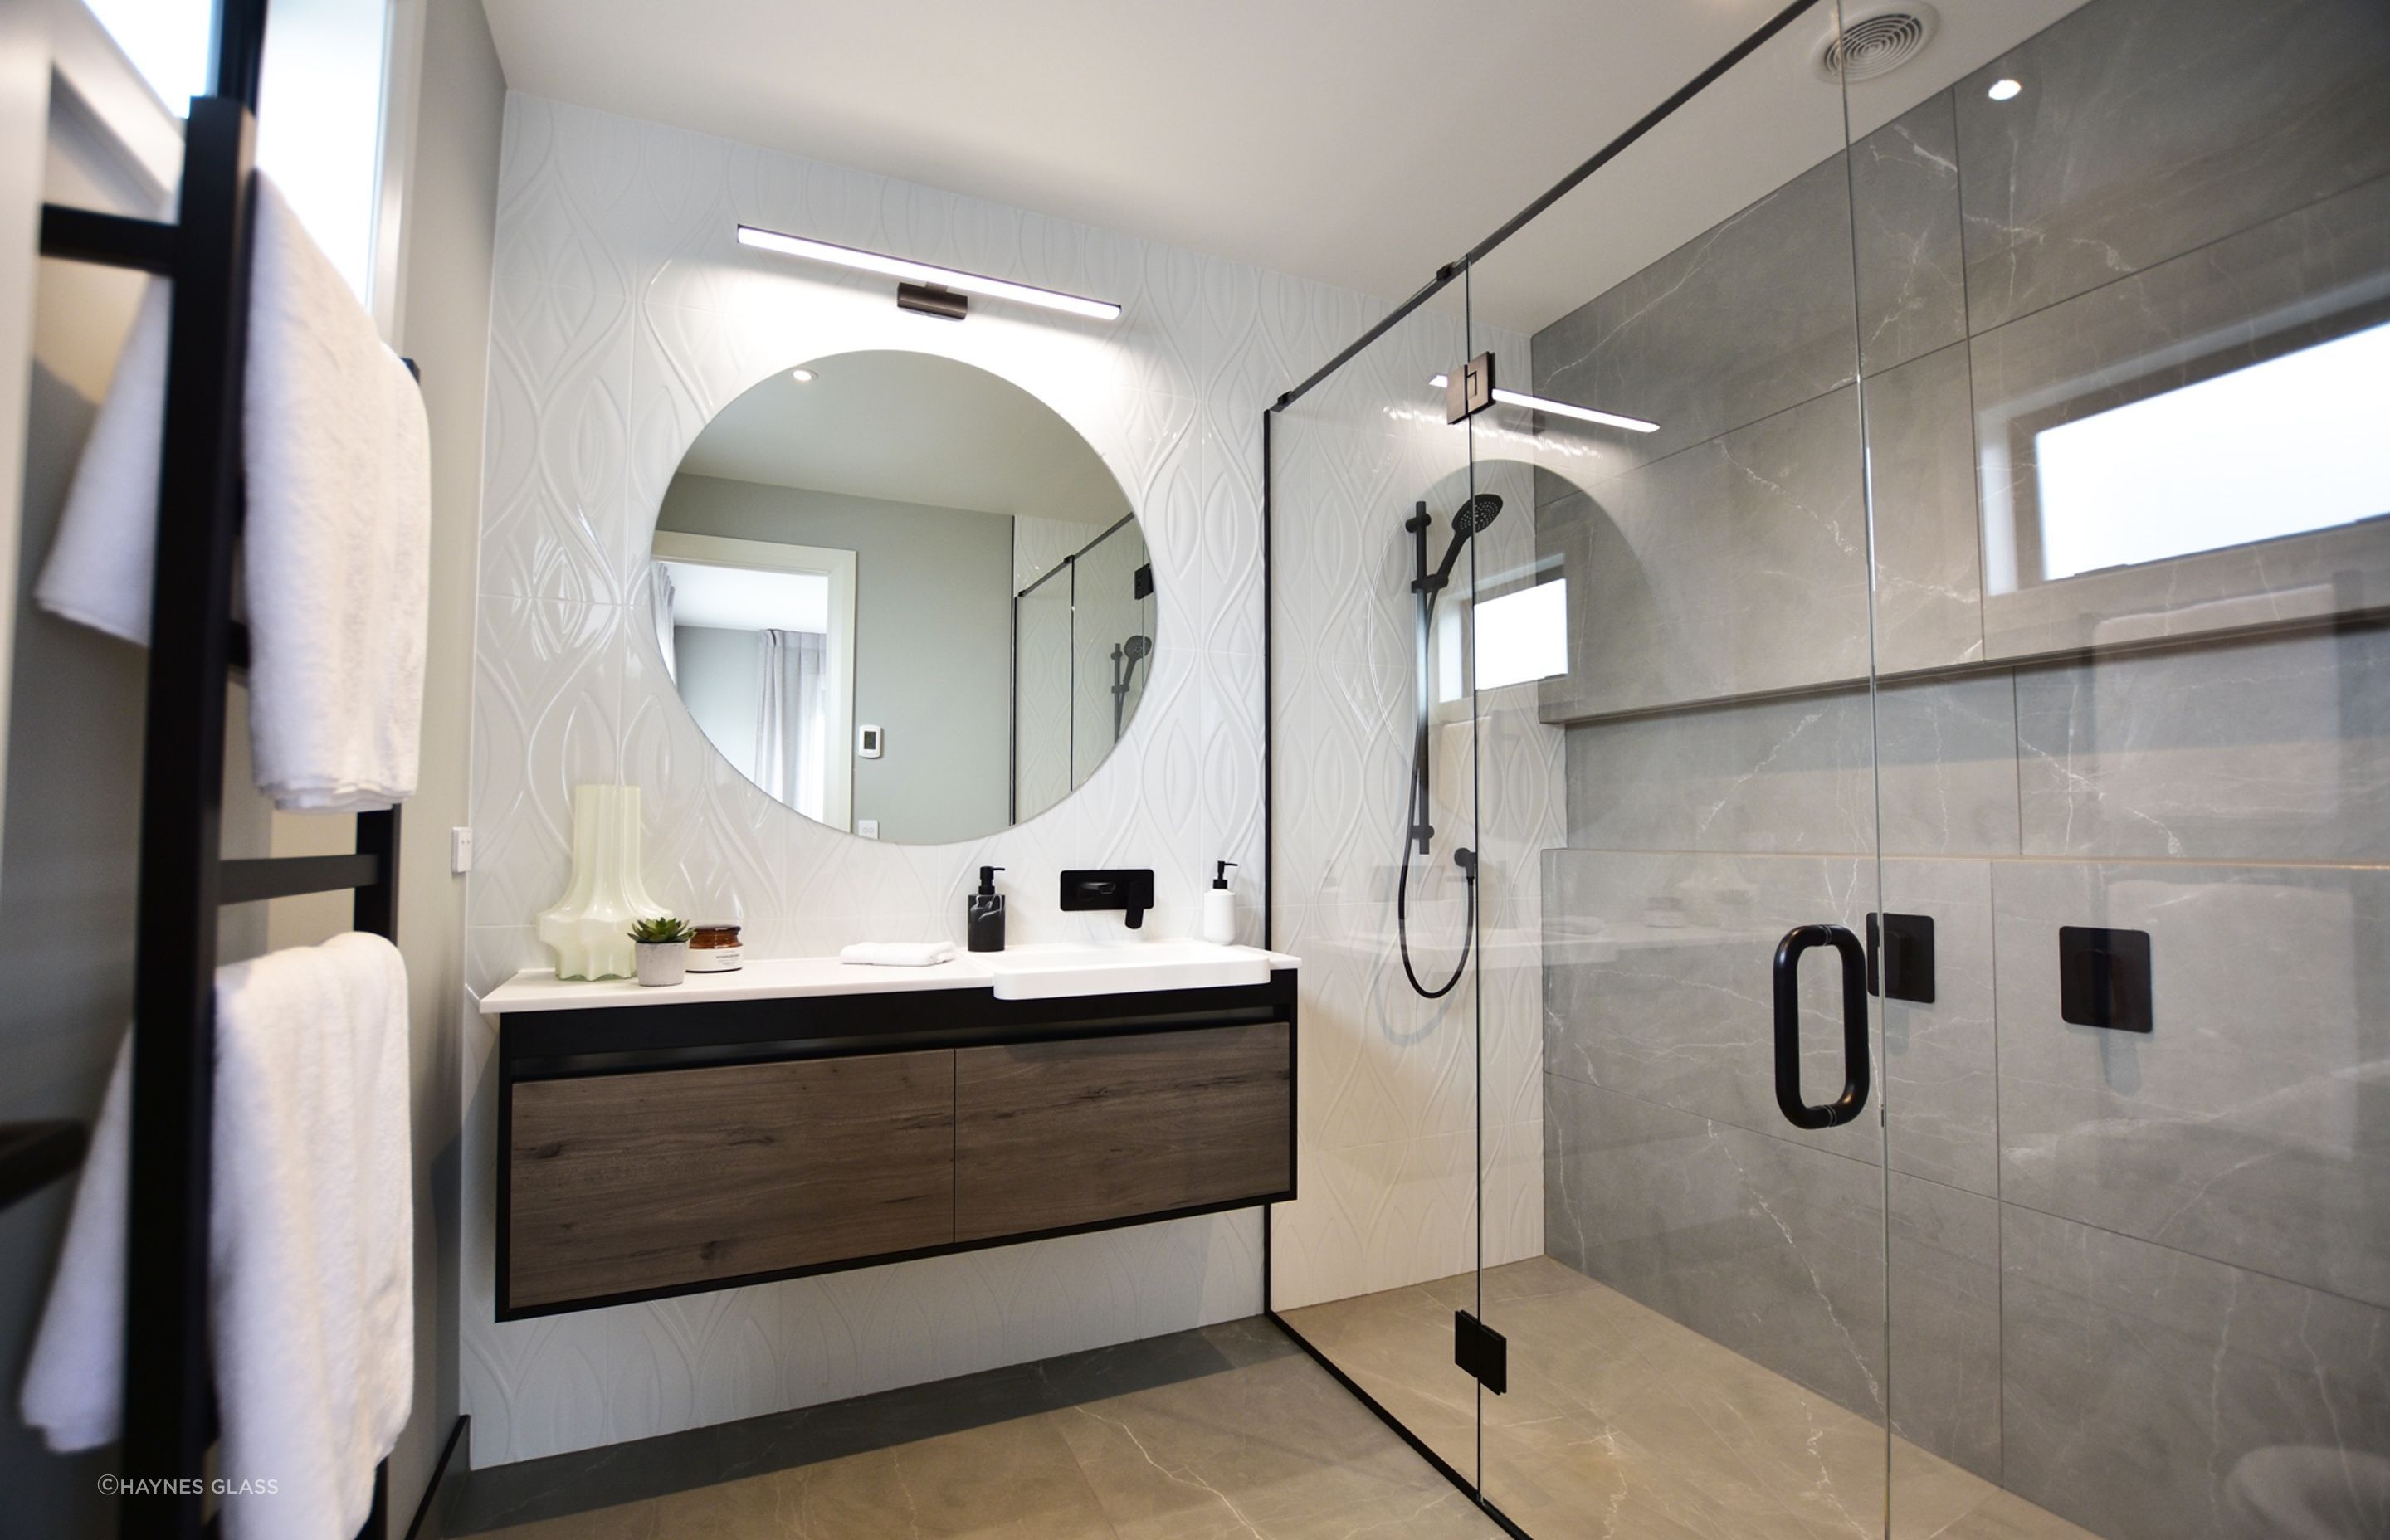 A large bathroom mirror, like the custom design by Haynes Glass, can enhance the feeling of spaciousness.